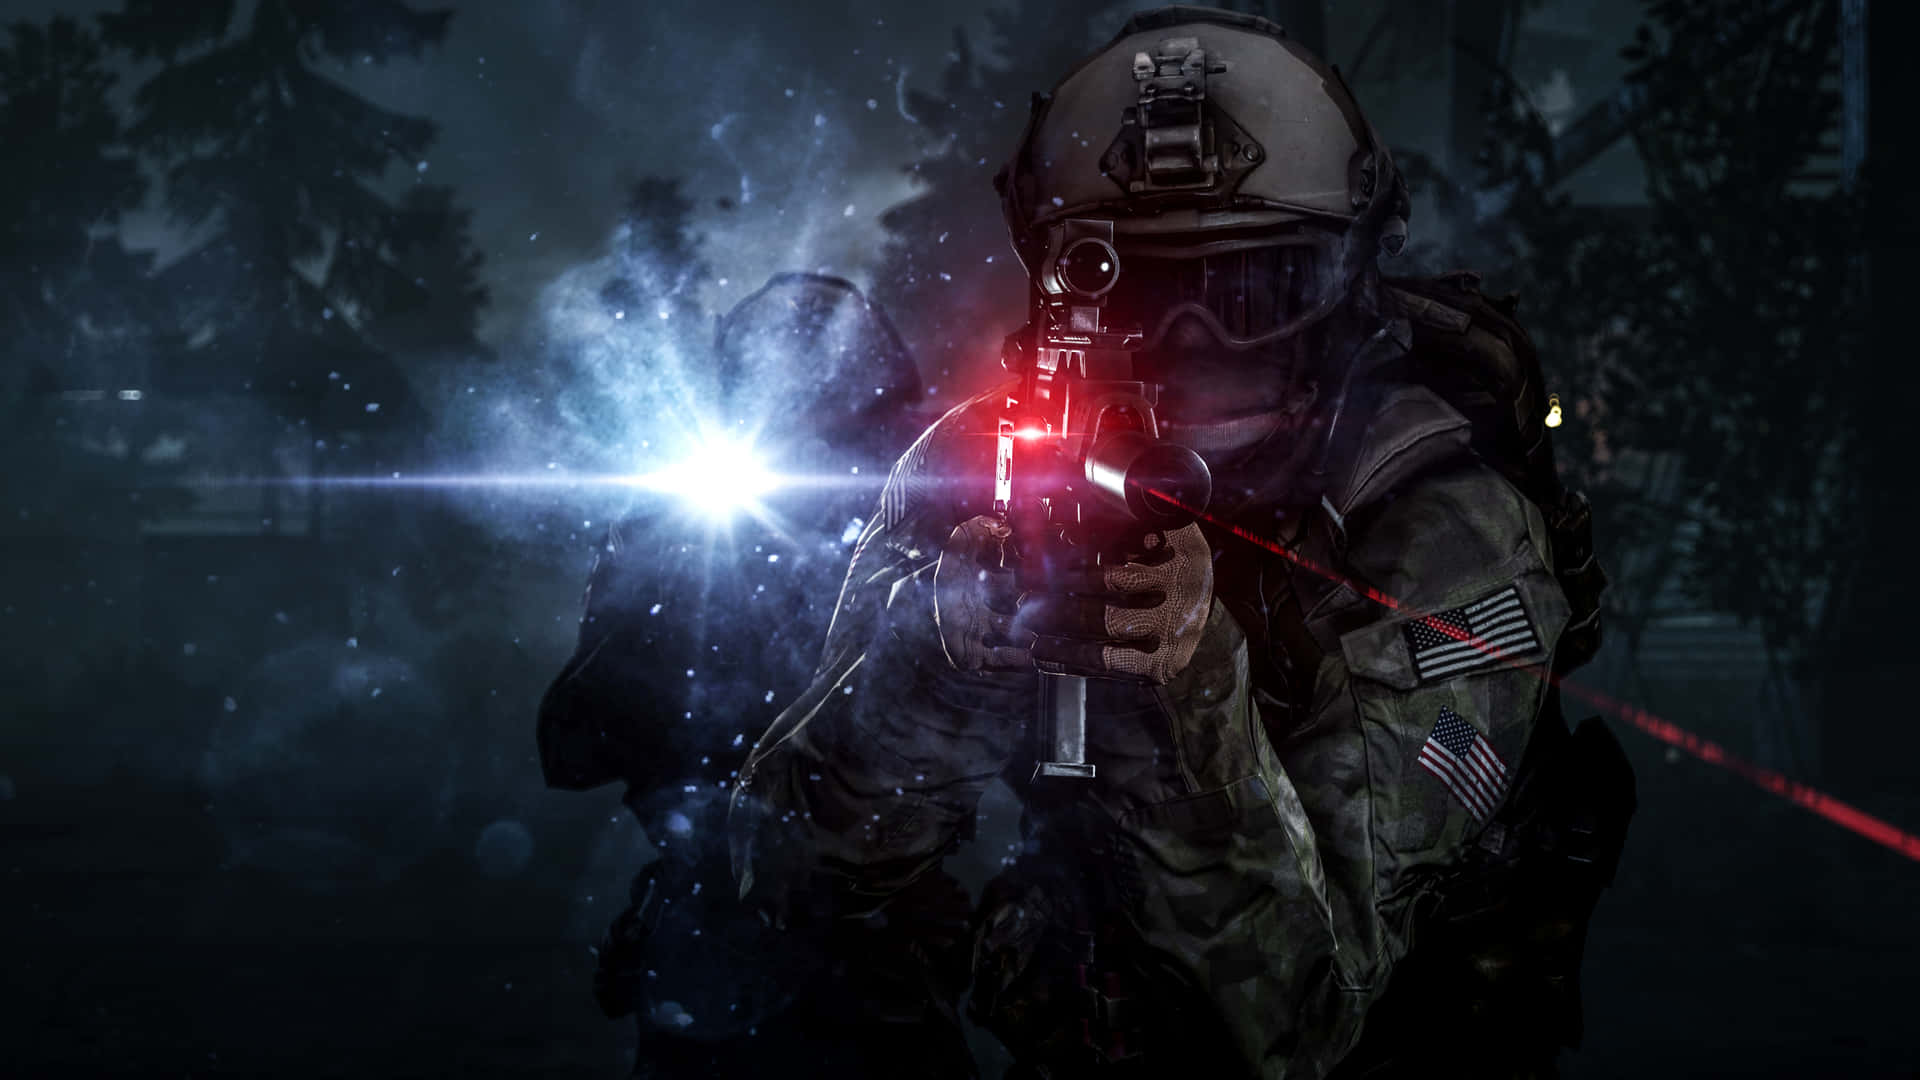 46+] Battlefield 4K Wallpaper - WallpaperSafari